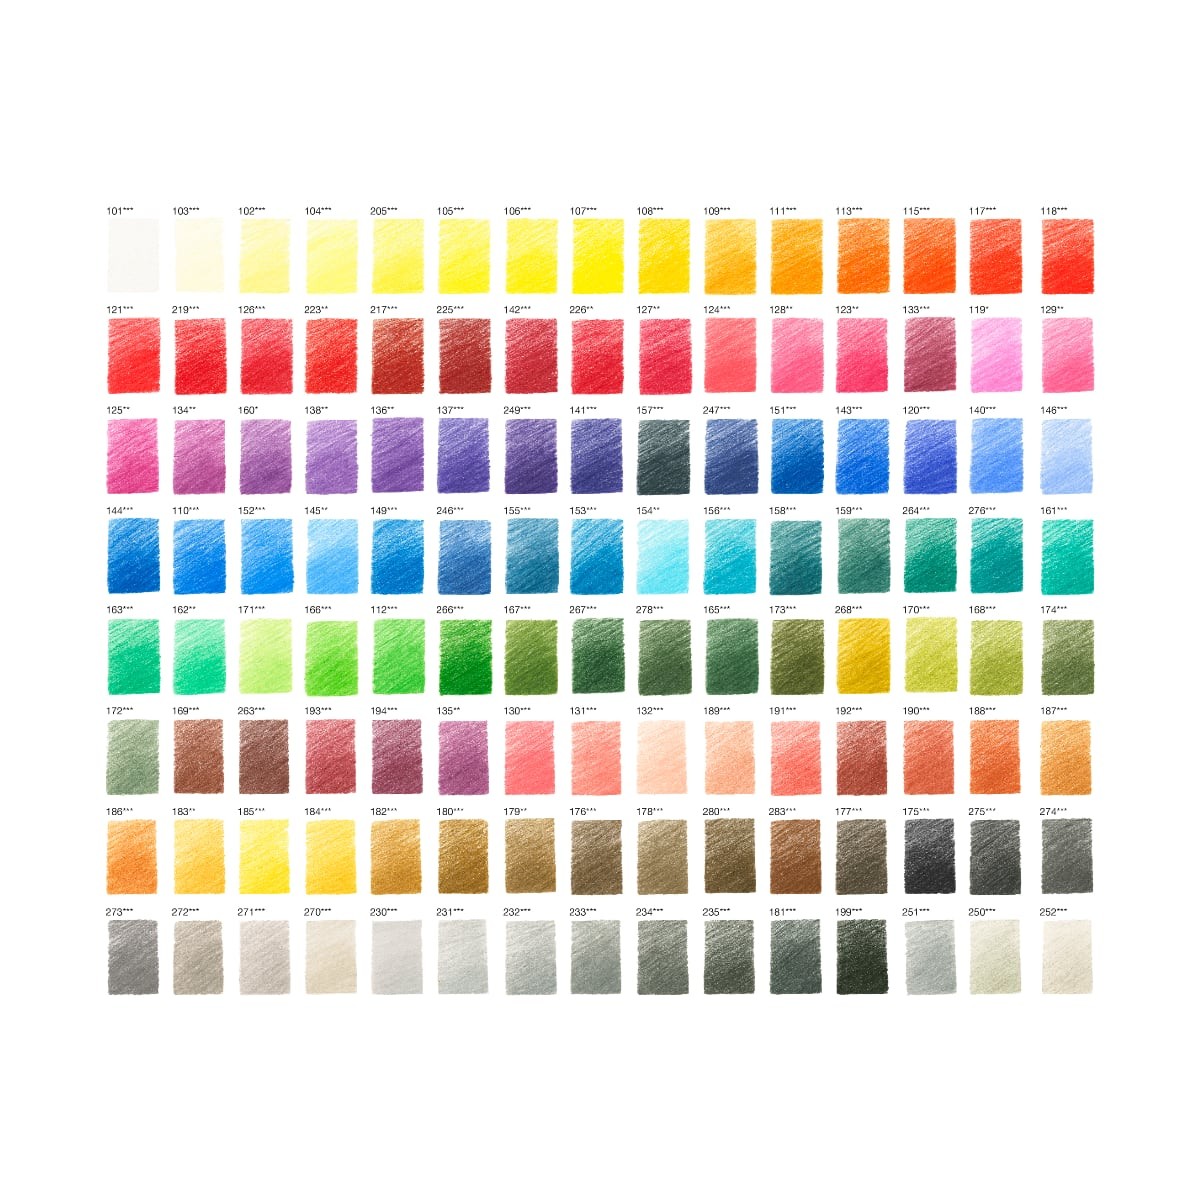 Faber-Castell Ξυλομπογιές Polychromos Μεταλλική Κασετίνα 120 χρωμάτων